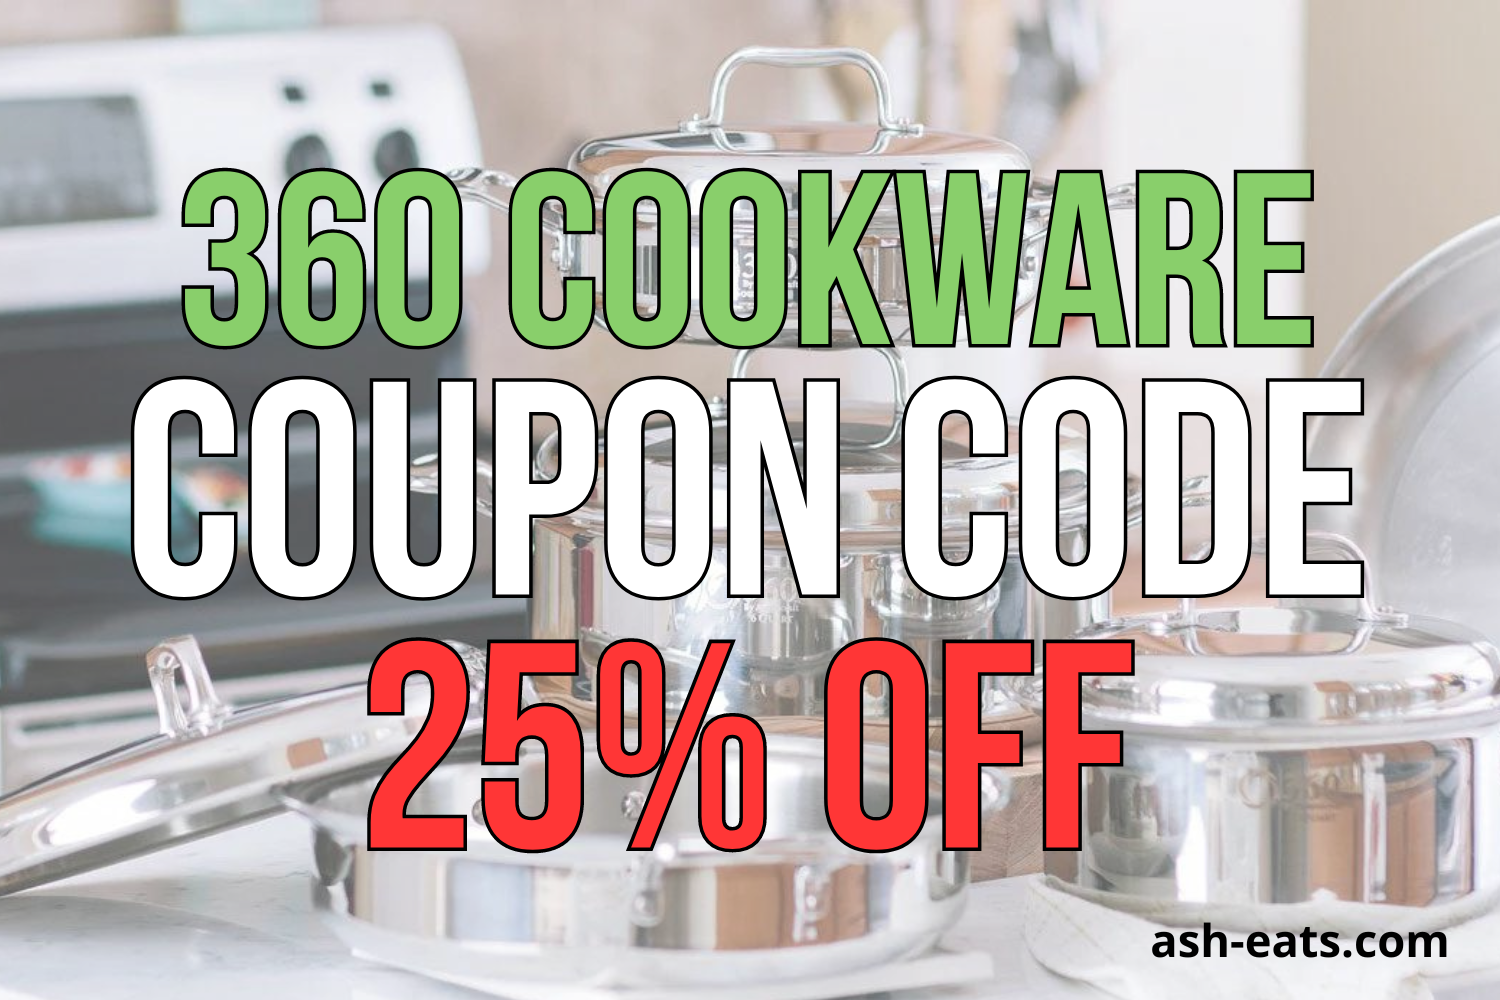 360 cookware coupon code